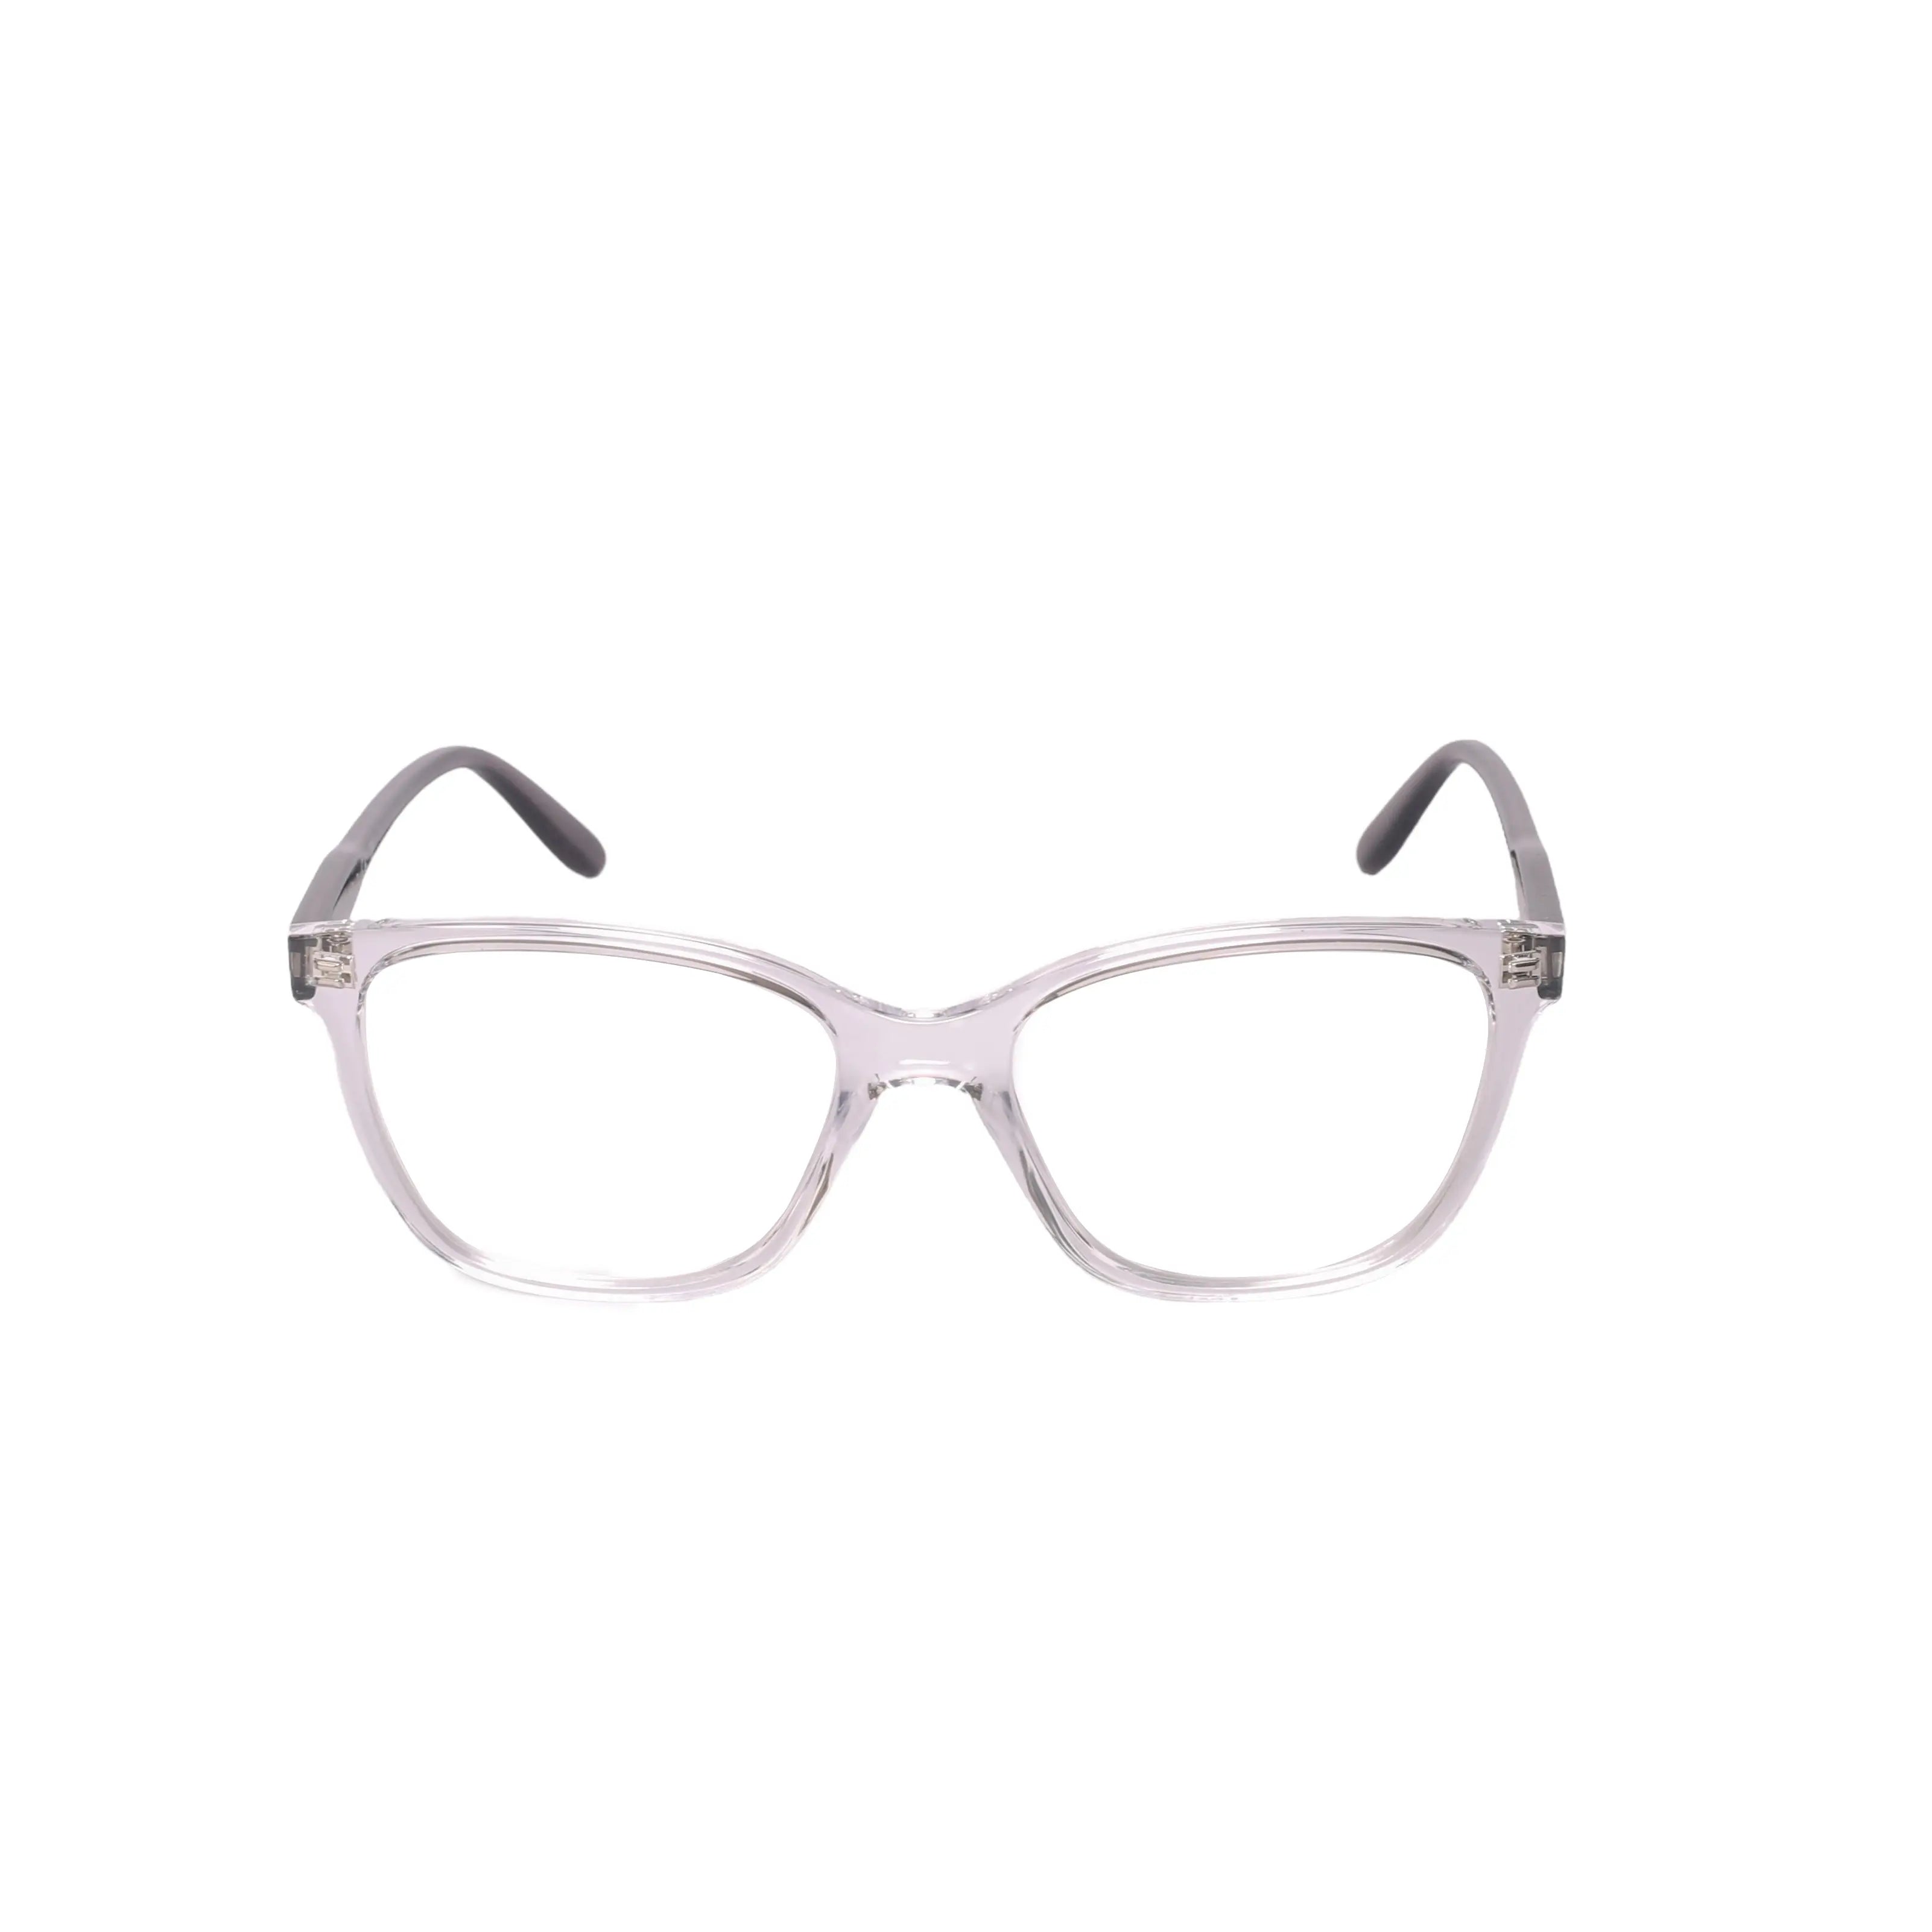 Vogue-VO5518-51-W745 Eyeglasses - Premium Eyeglasses from Vogue - Just Rs. 4890! Shop now at Laxmi Opticians